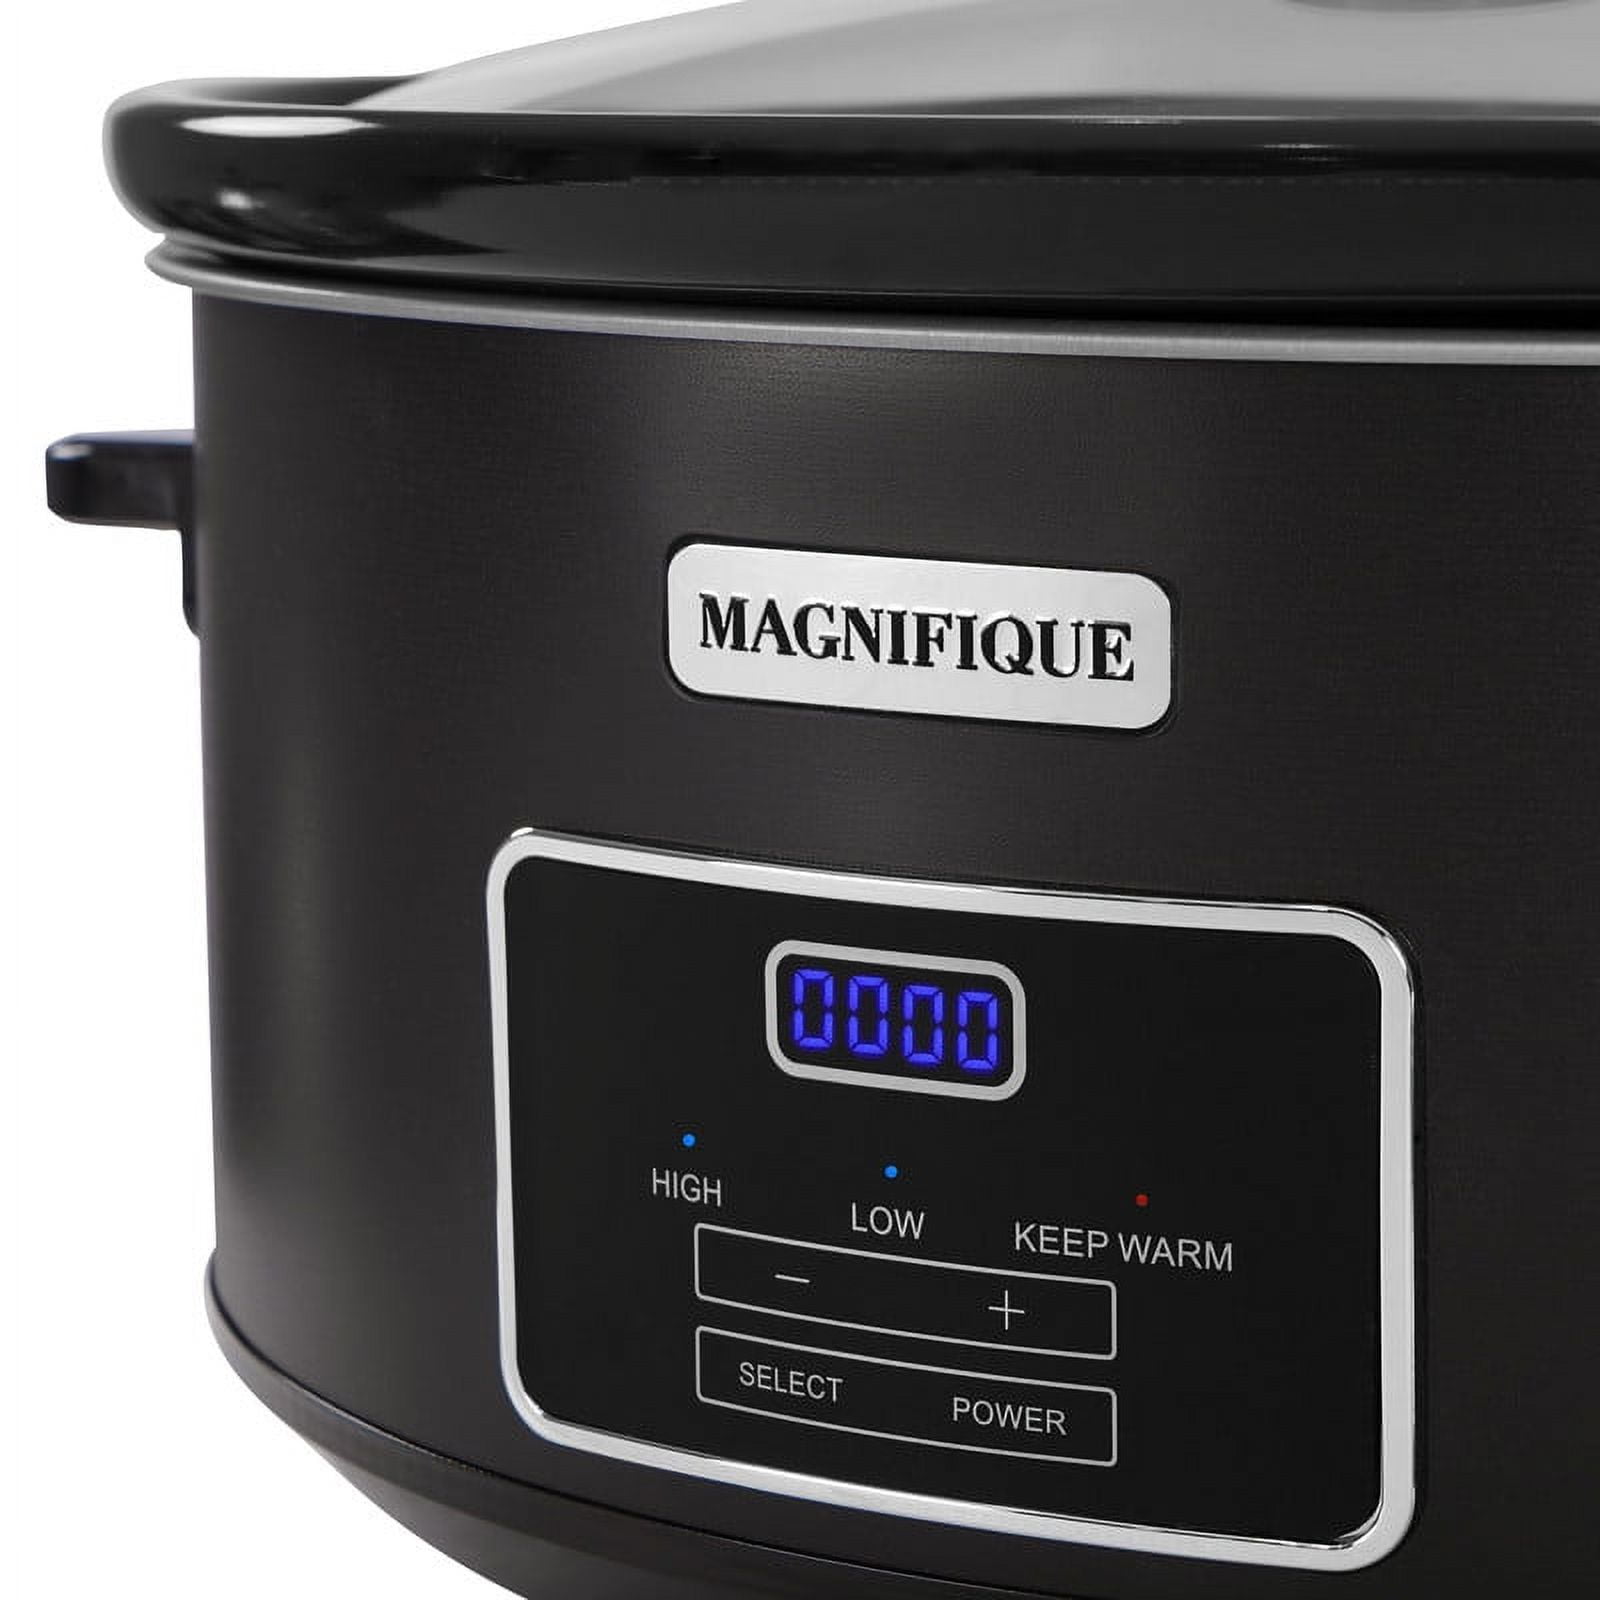 Crock-Pot Cook & Carry Programmable Smart Pot Slow Cooker - Black/Silver, 6  qt - Fred Meyer